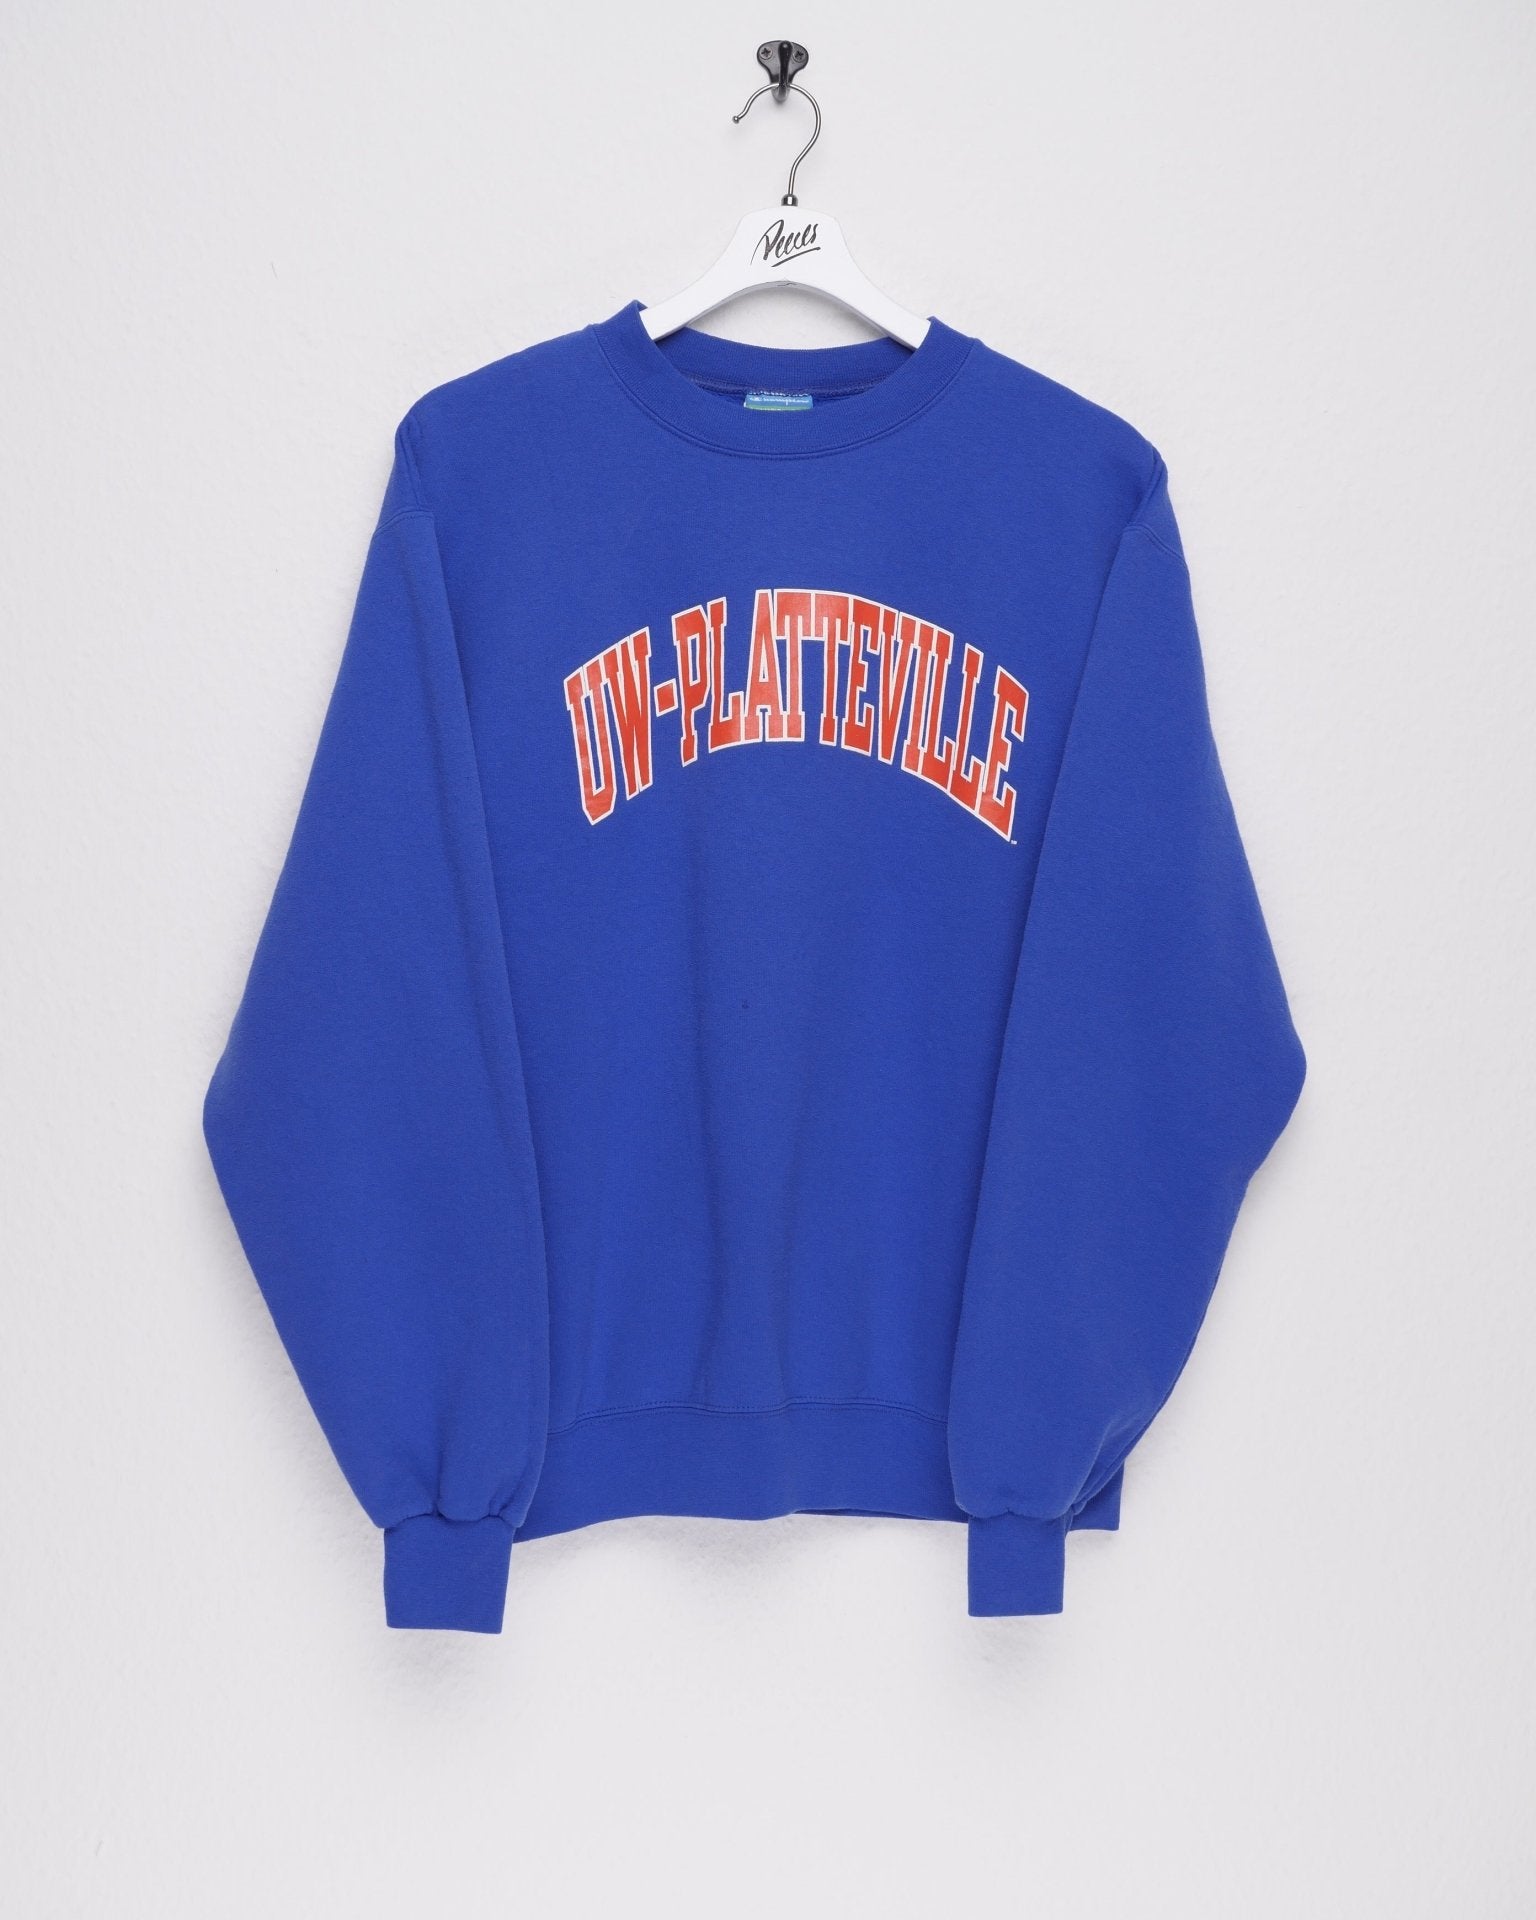 champion embroidered Logo 'UW-Platteville' blue Sweater - Peeces